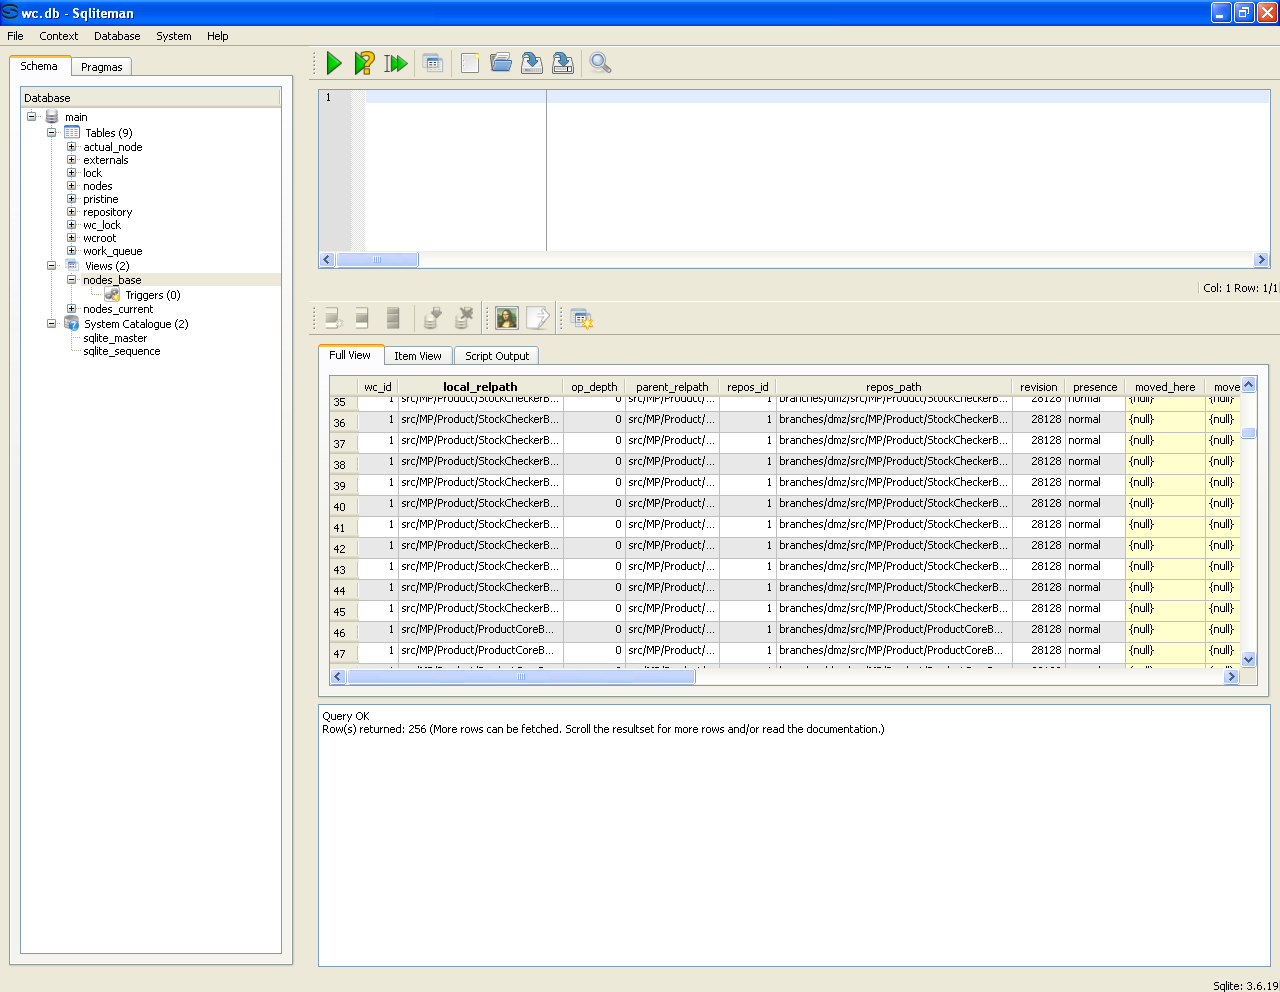 SQLiteman view of the SVN database